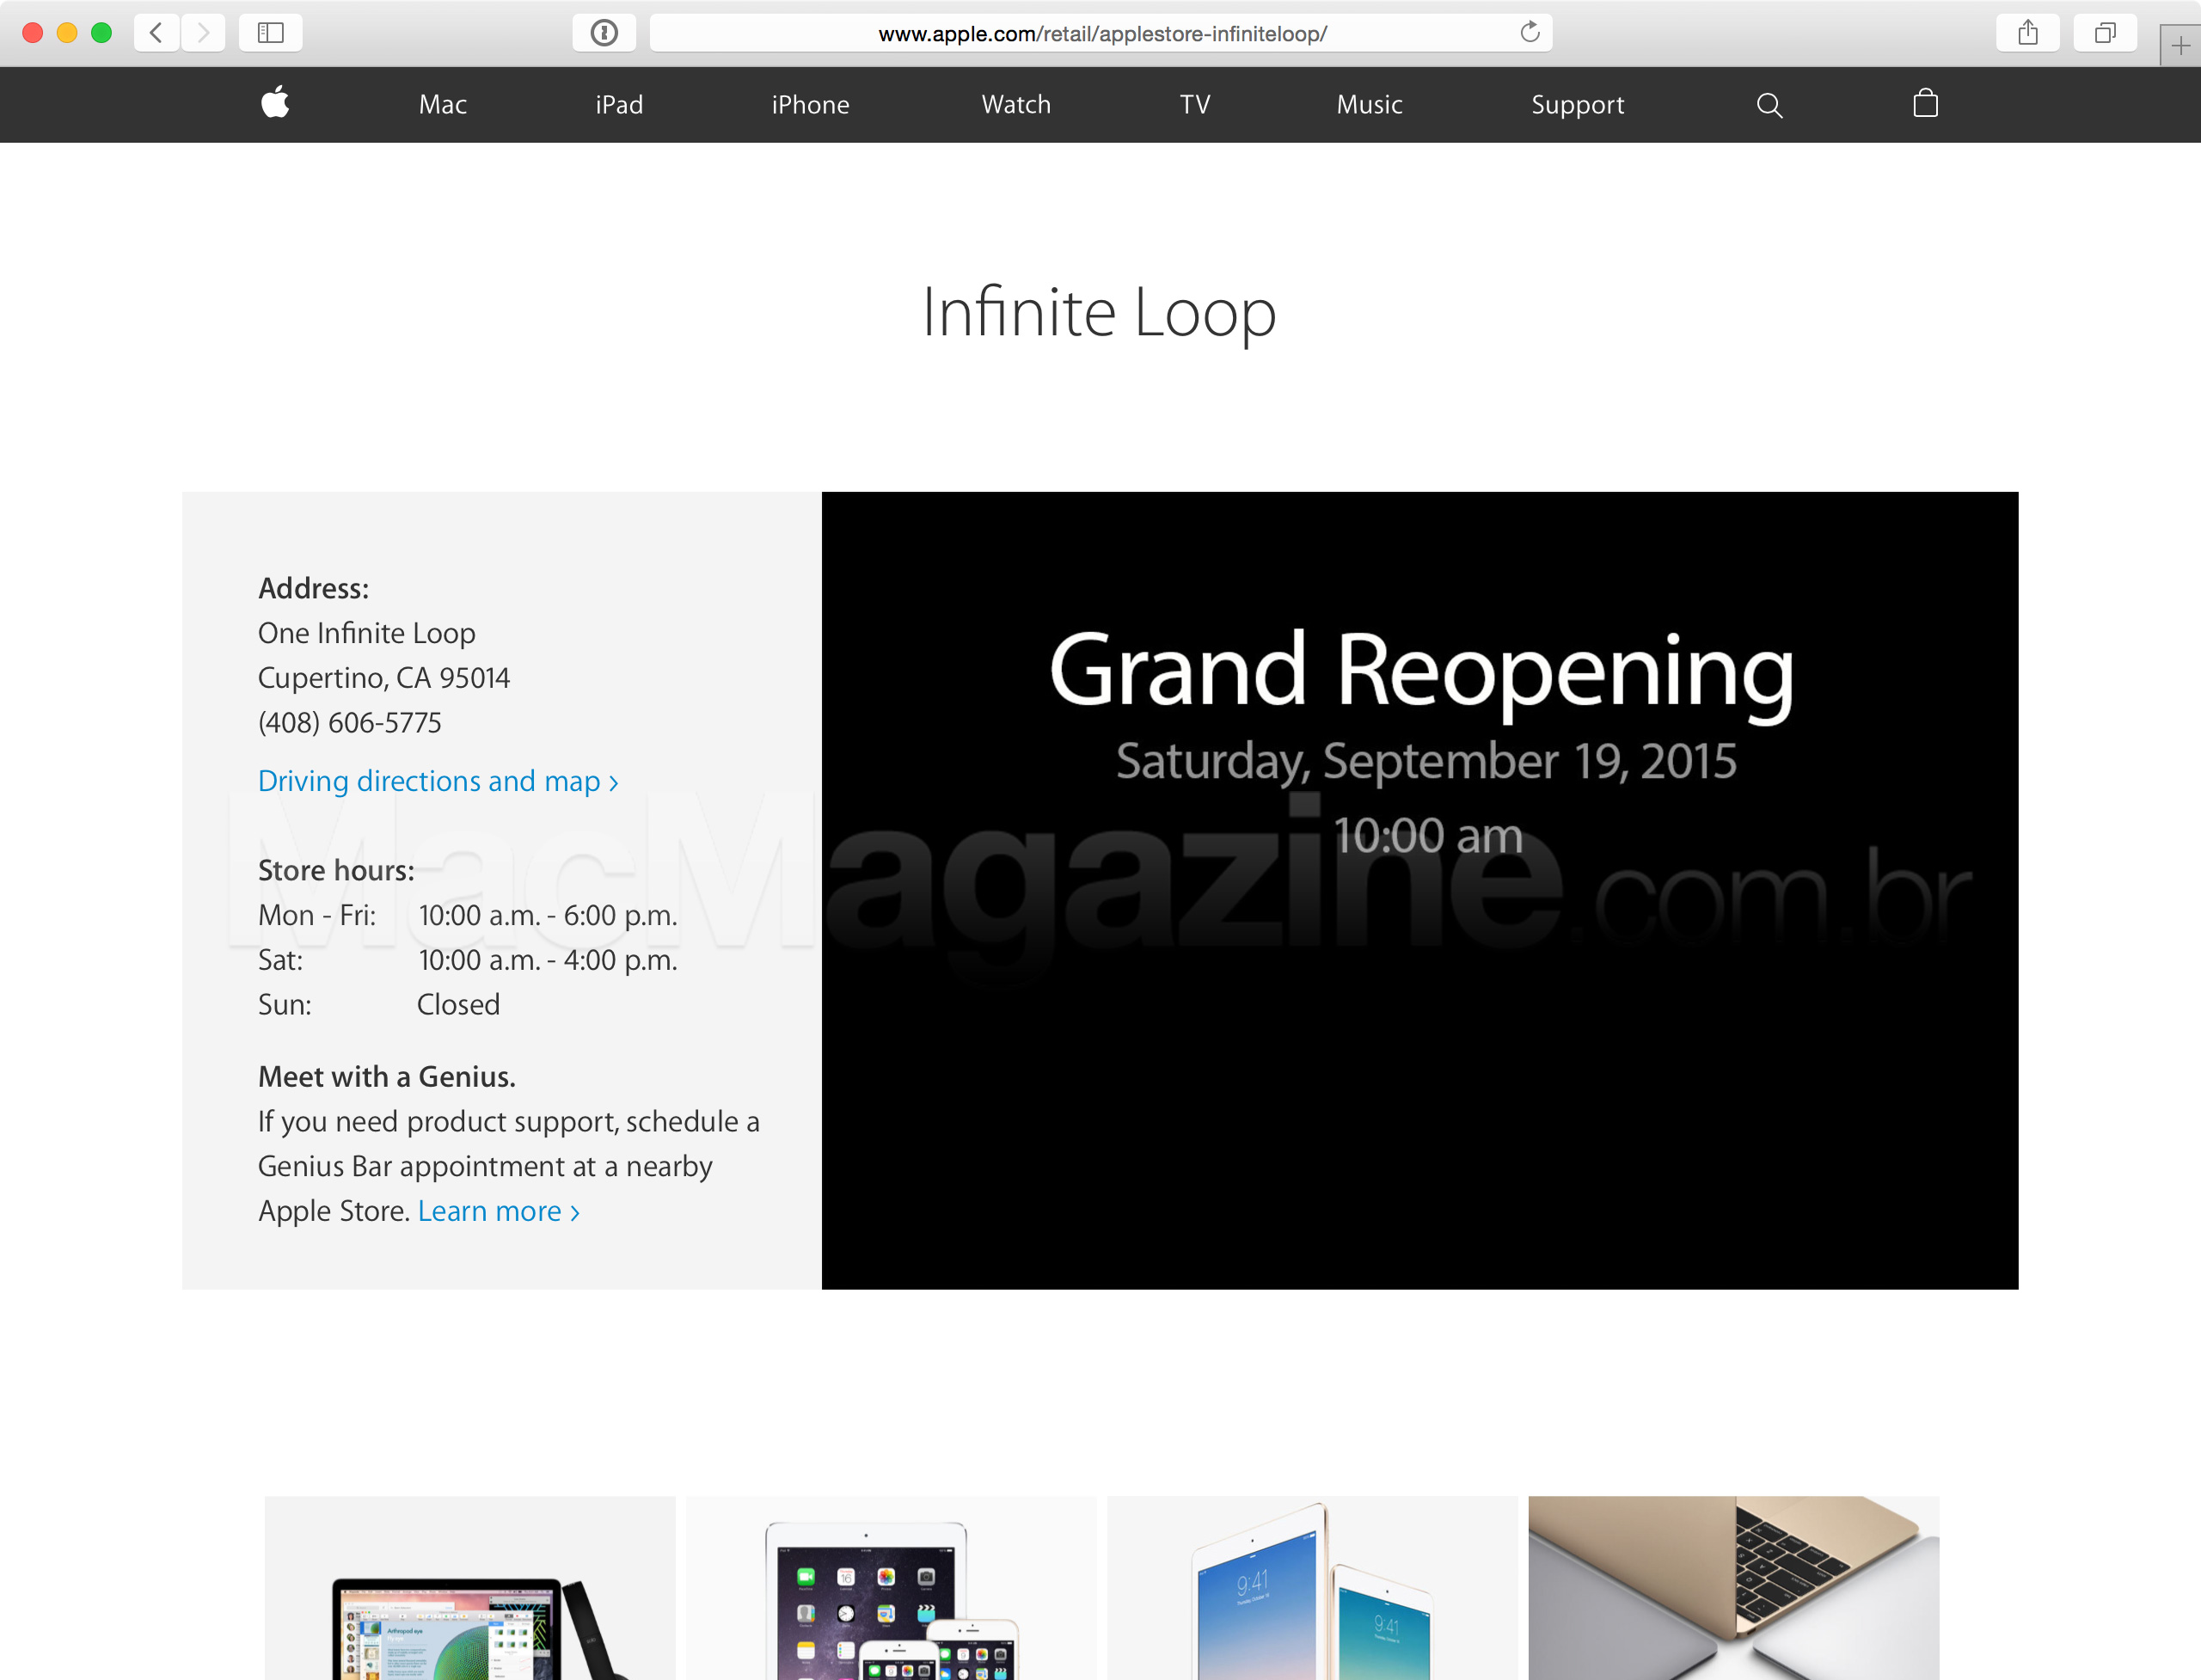 Apple Retail Store - 1 Infinite Loop (reinaugração)